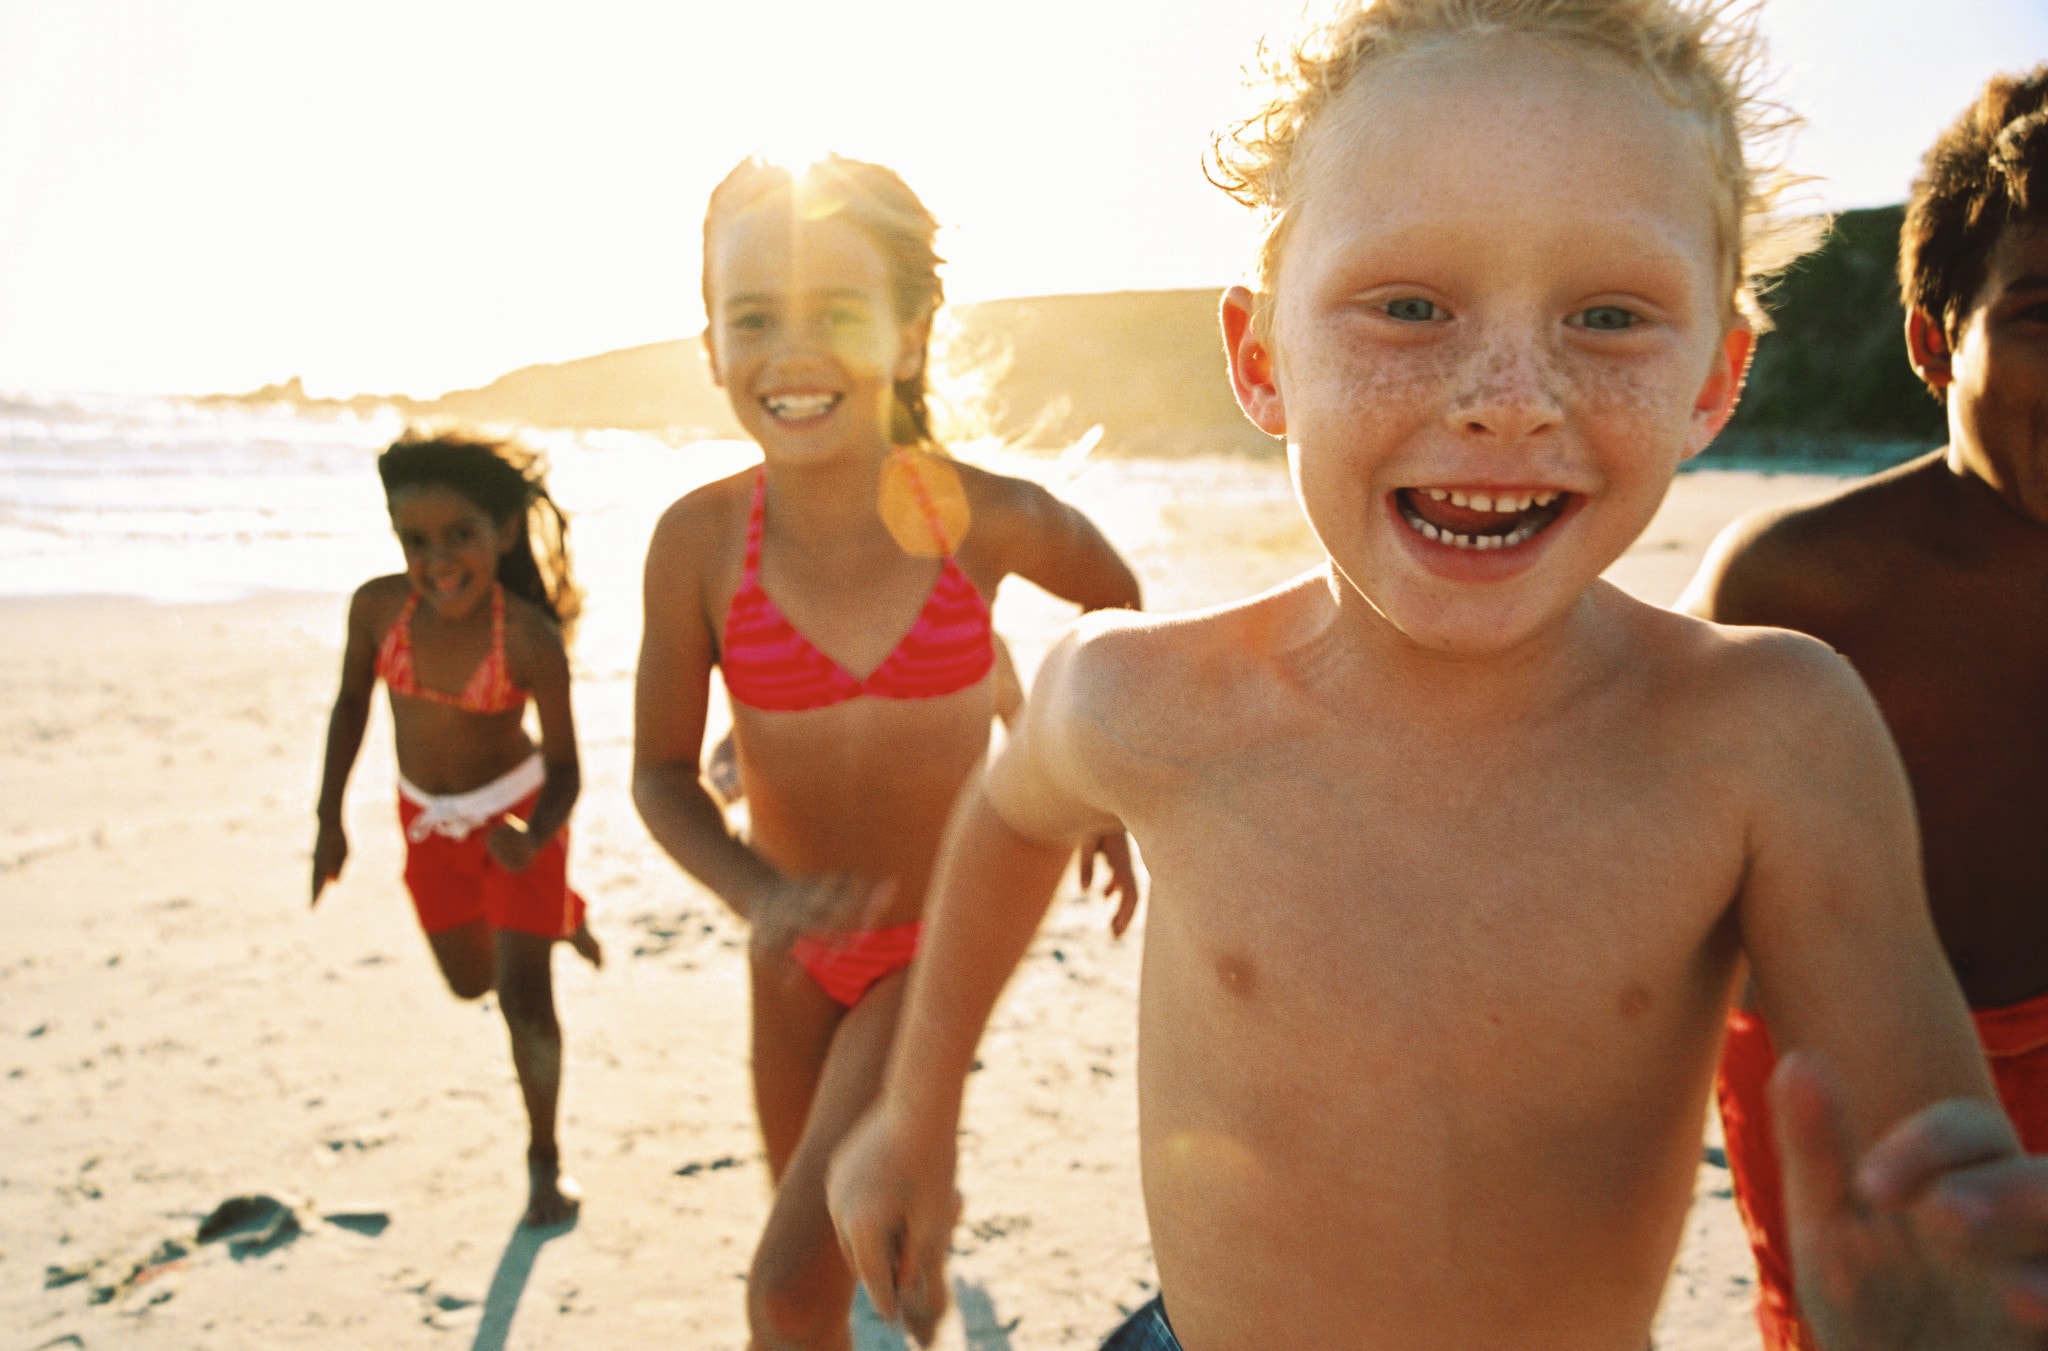 Kids running on the beach smiling!